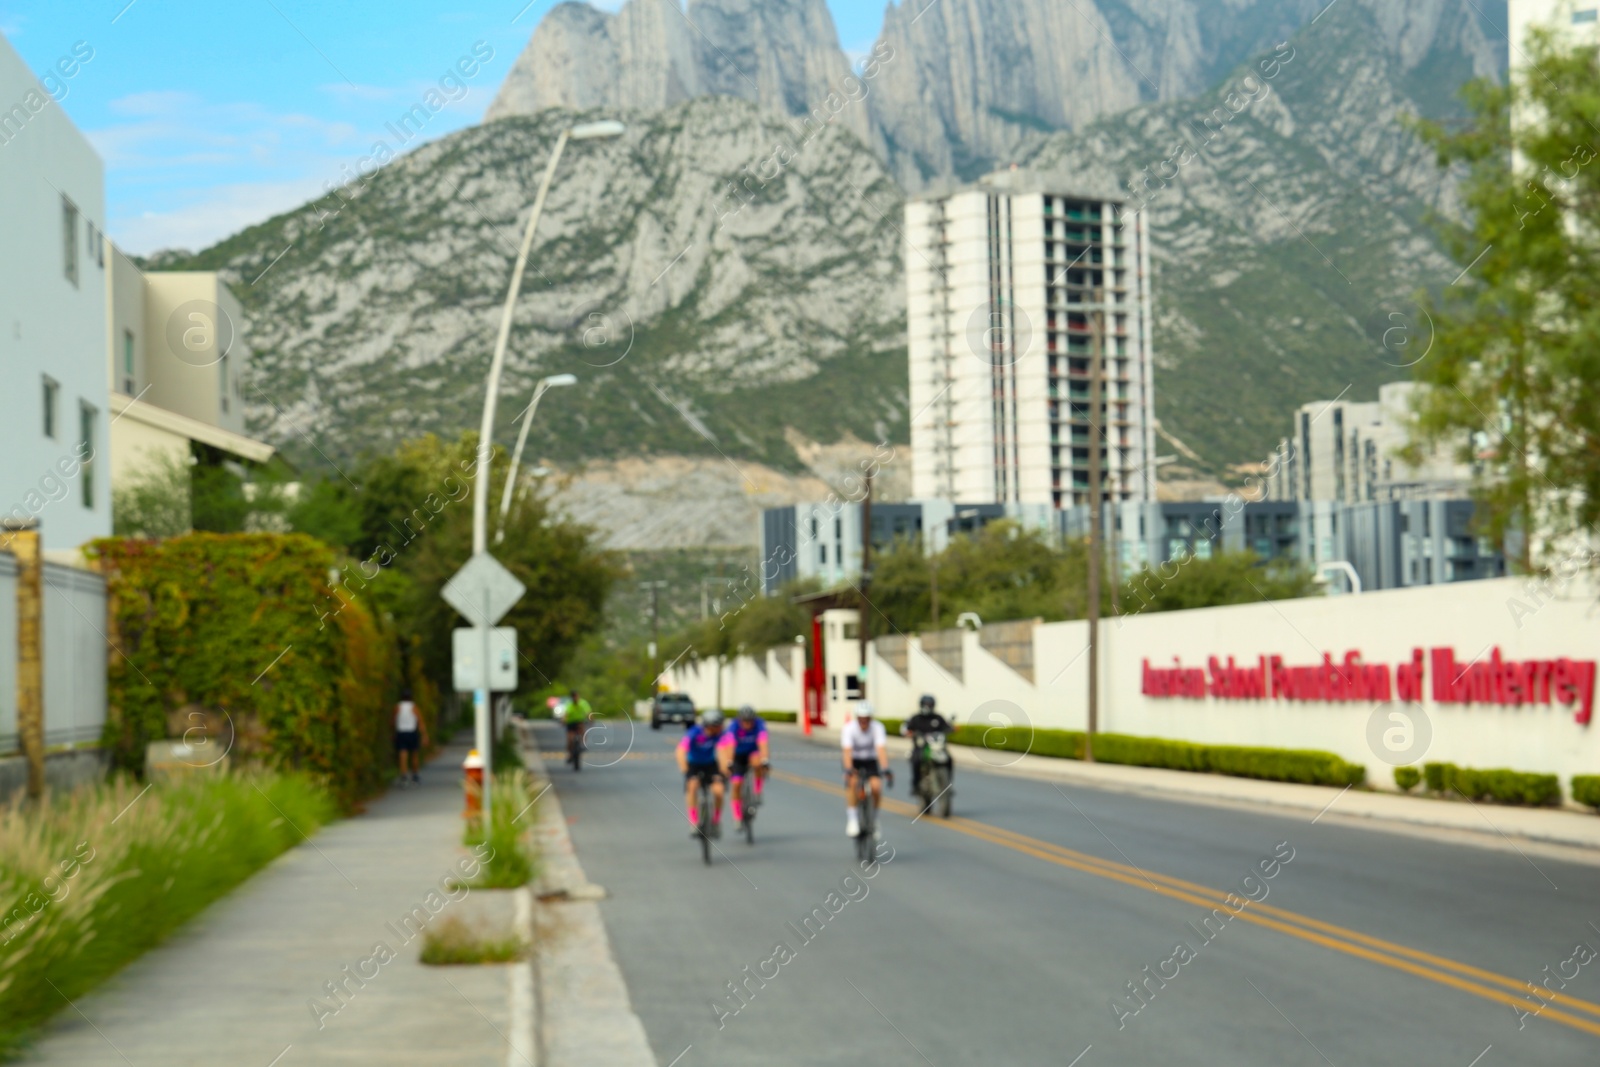 Photo of Mexico, San Pedro Garza Garcia - August 27, 2022: City street near mountains, blurred view